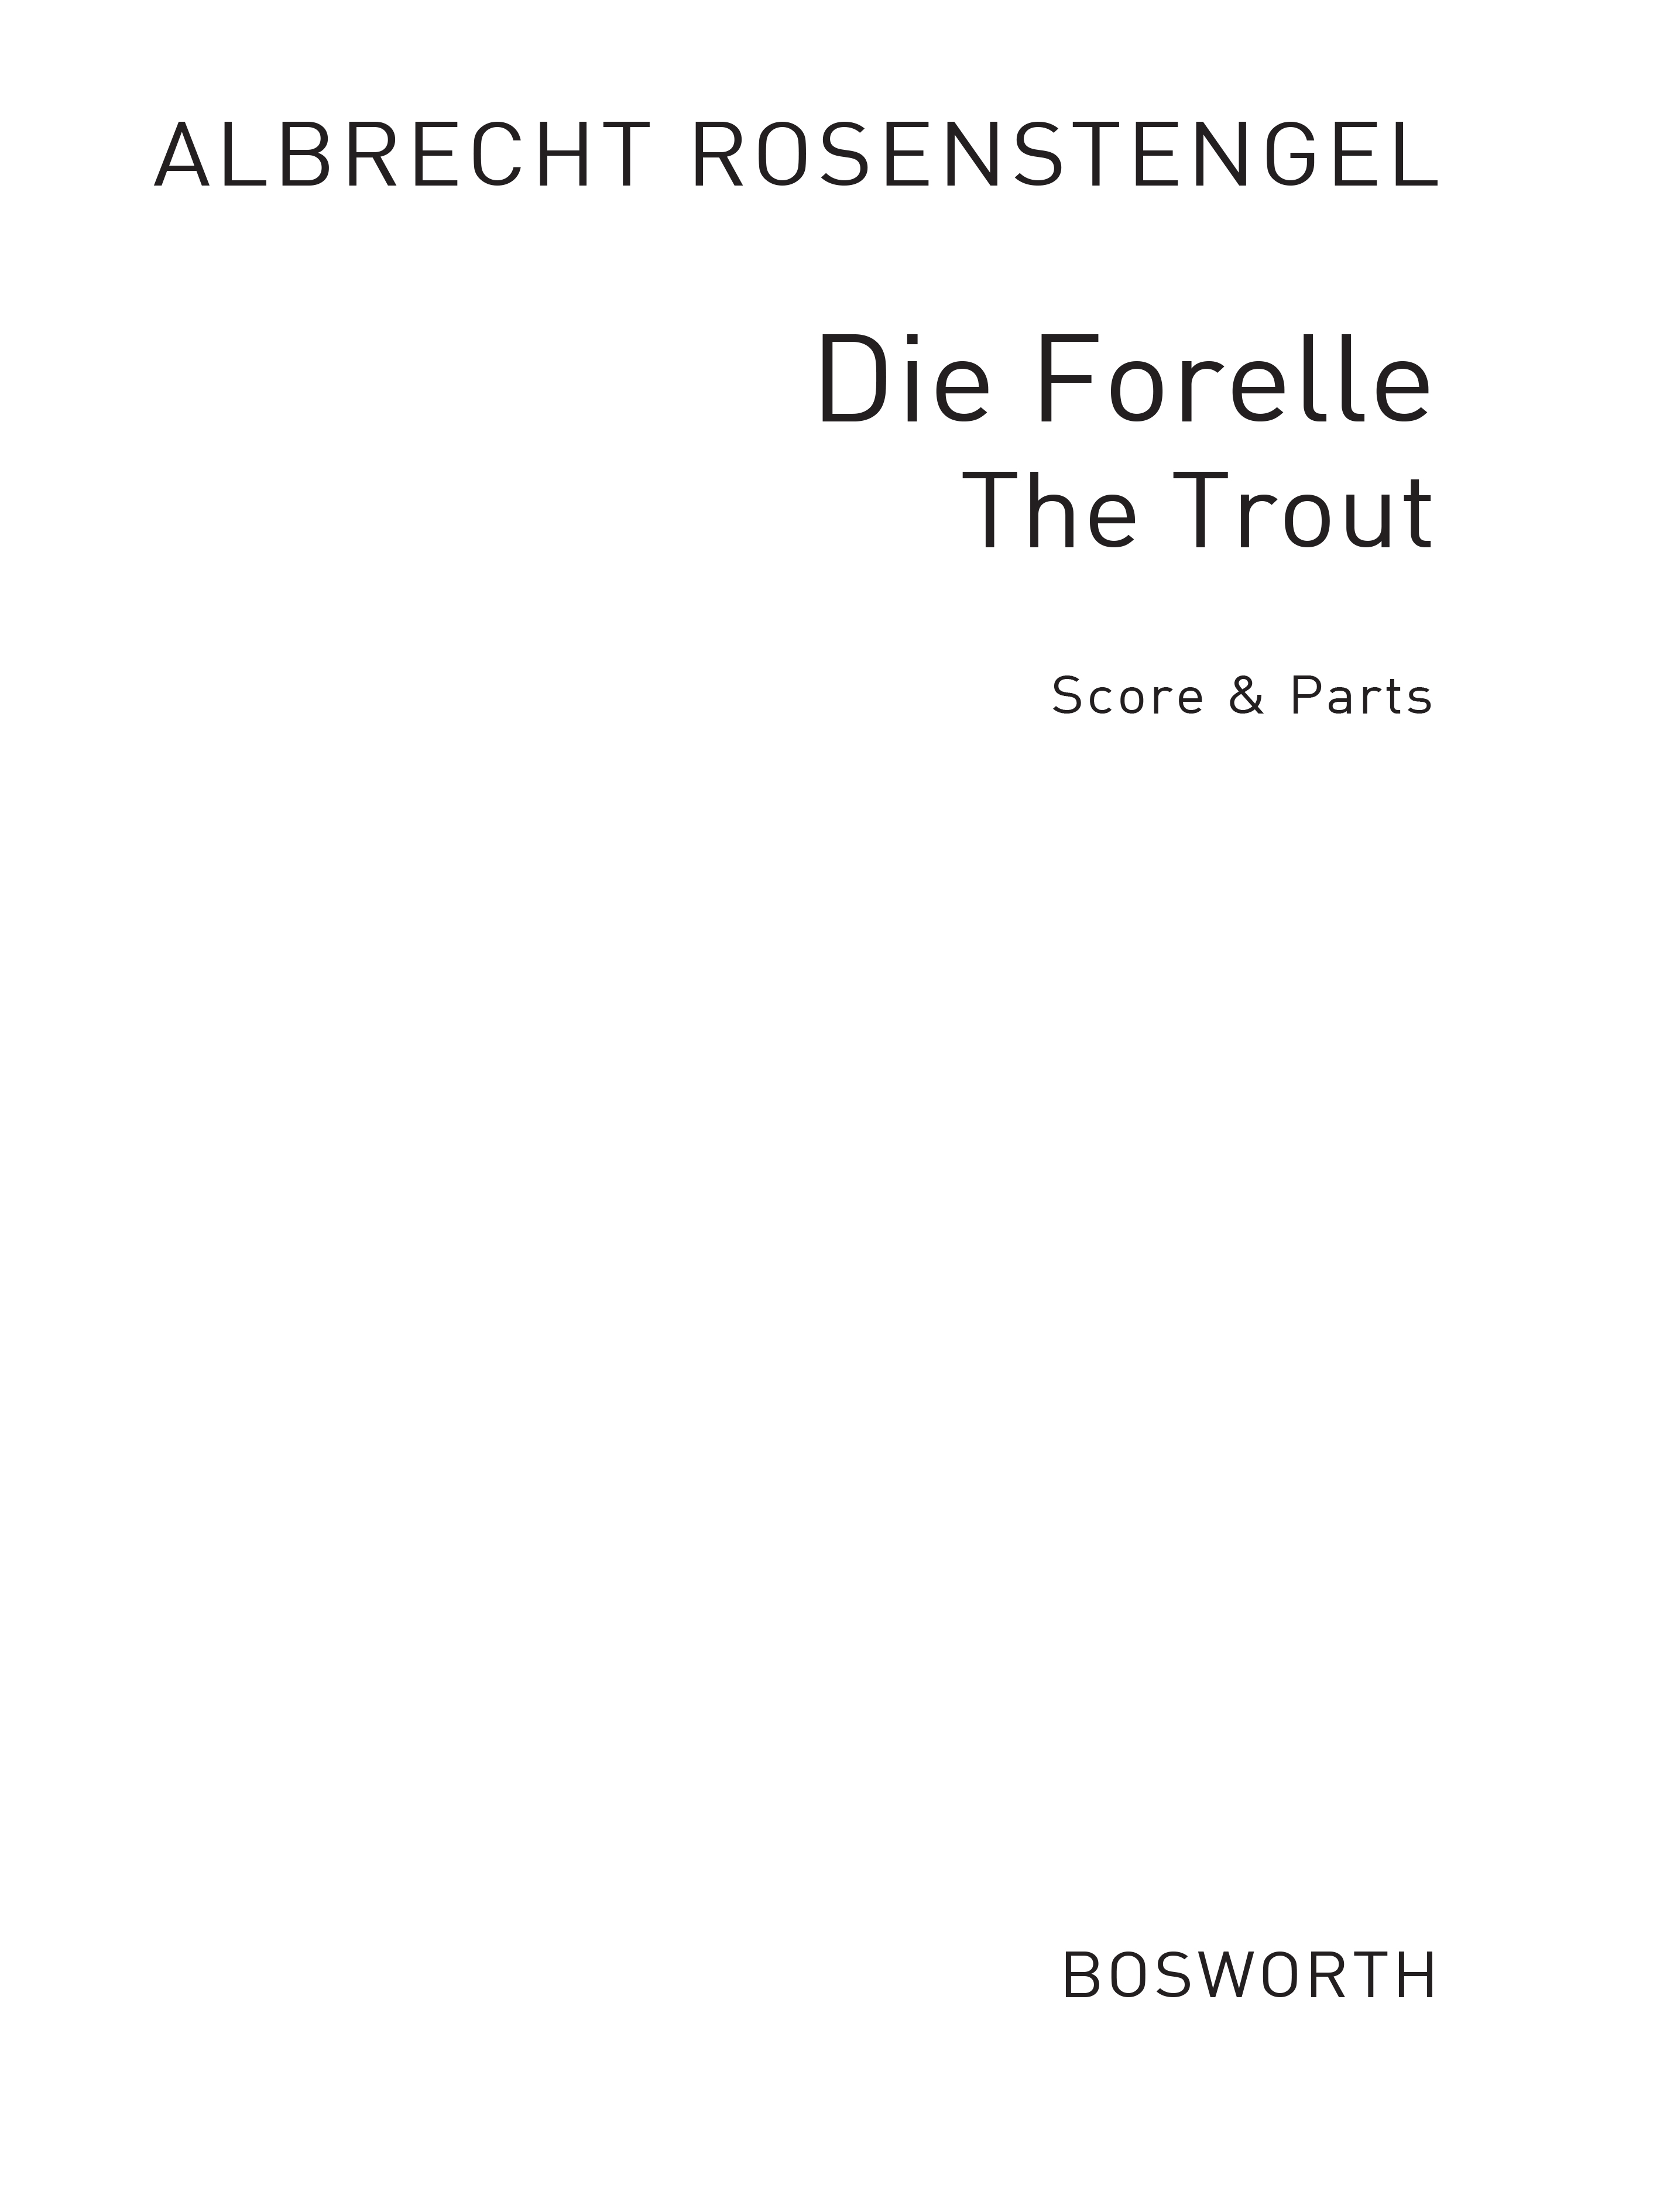 Franz Schubert: Forelle: Recorder Ensemble: Single Sheet